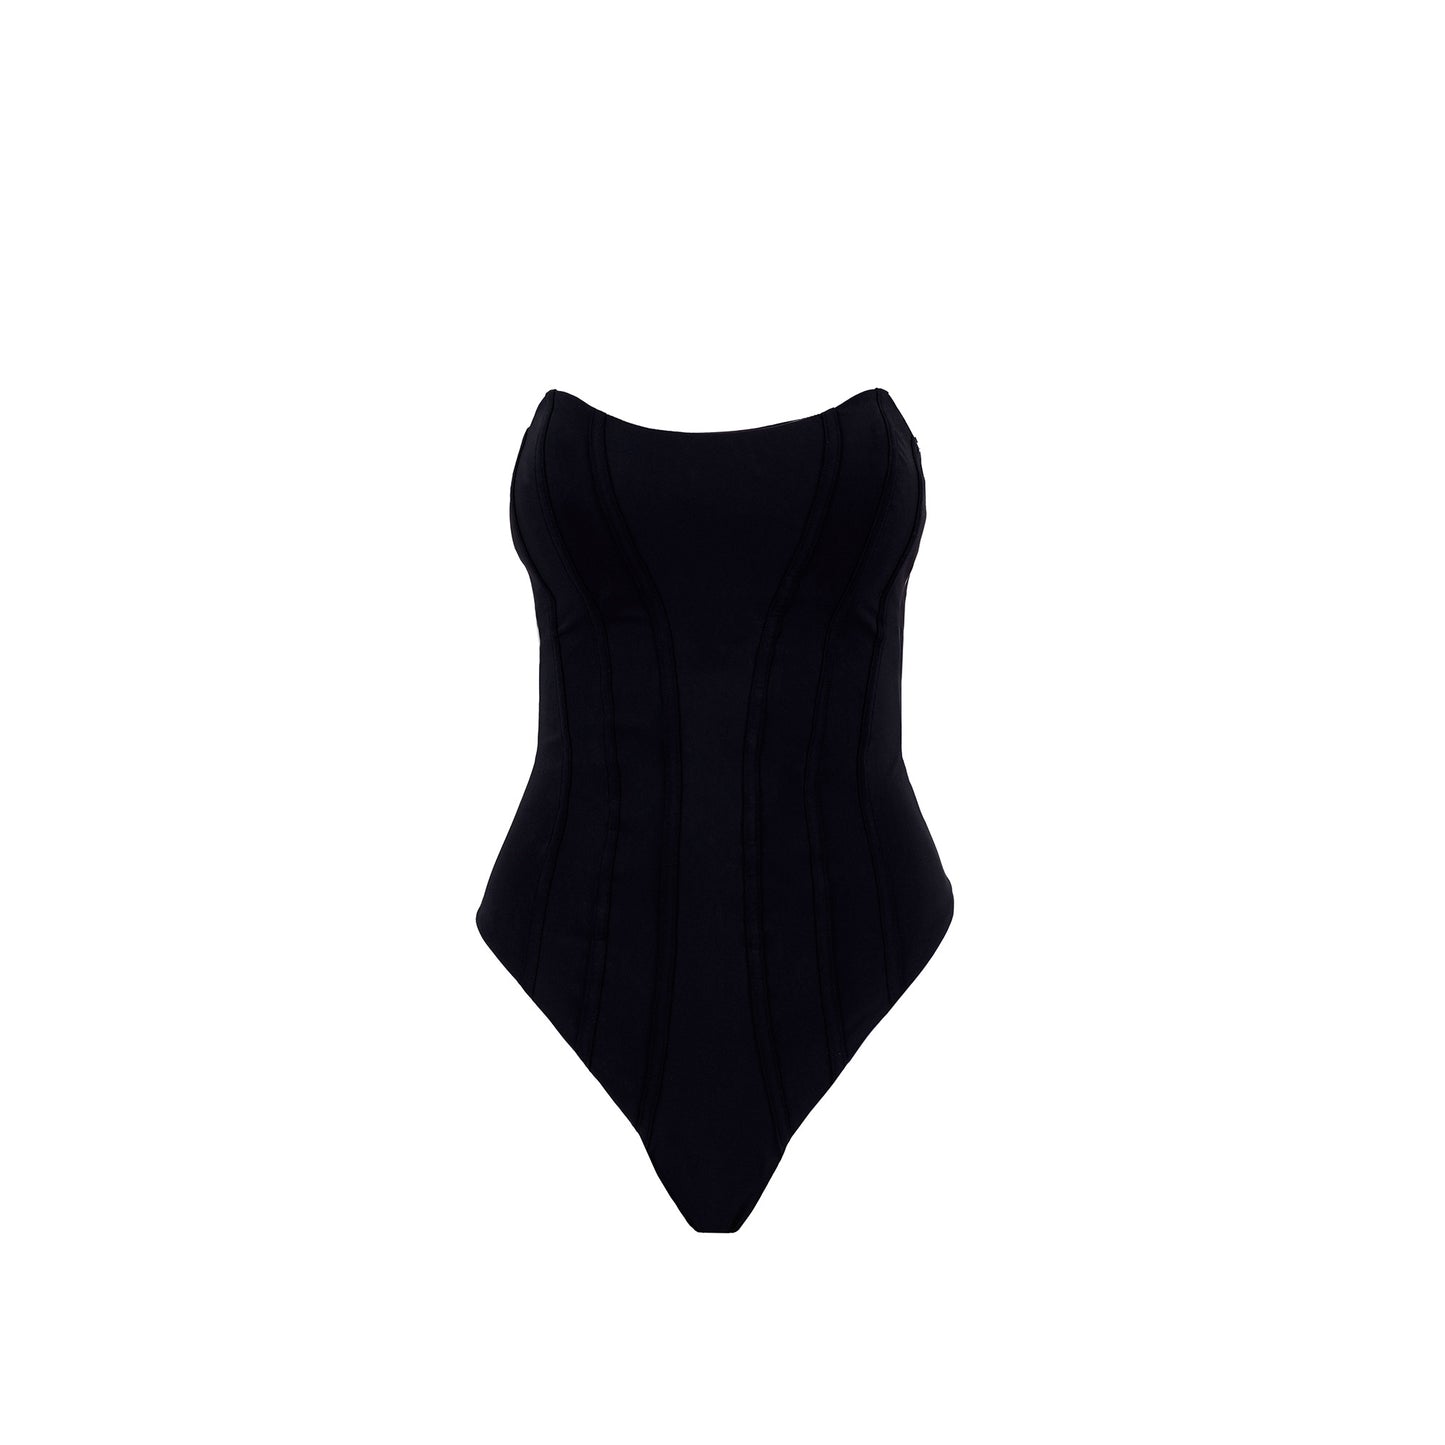 Black IVY one-piece swimsuit